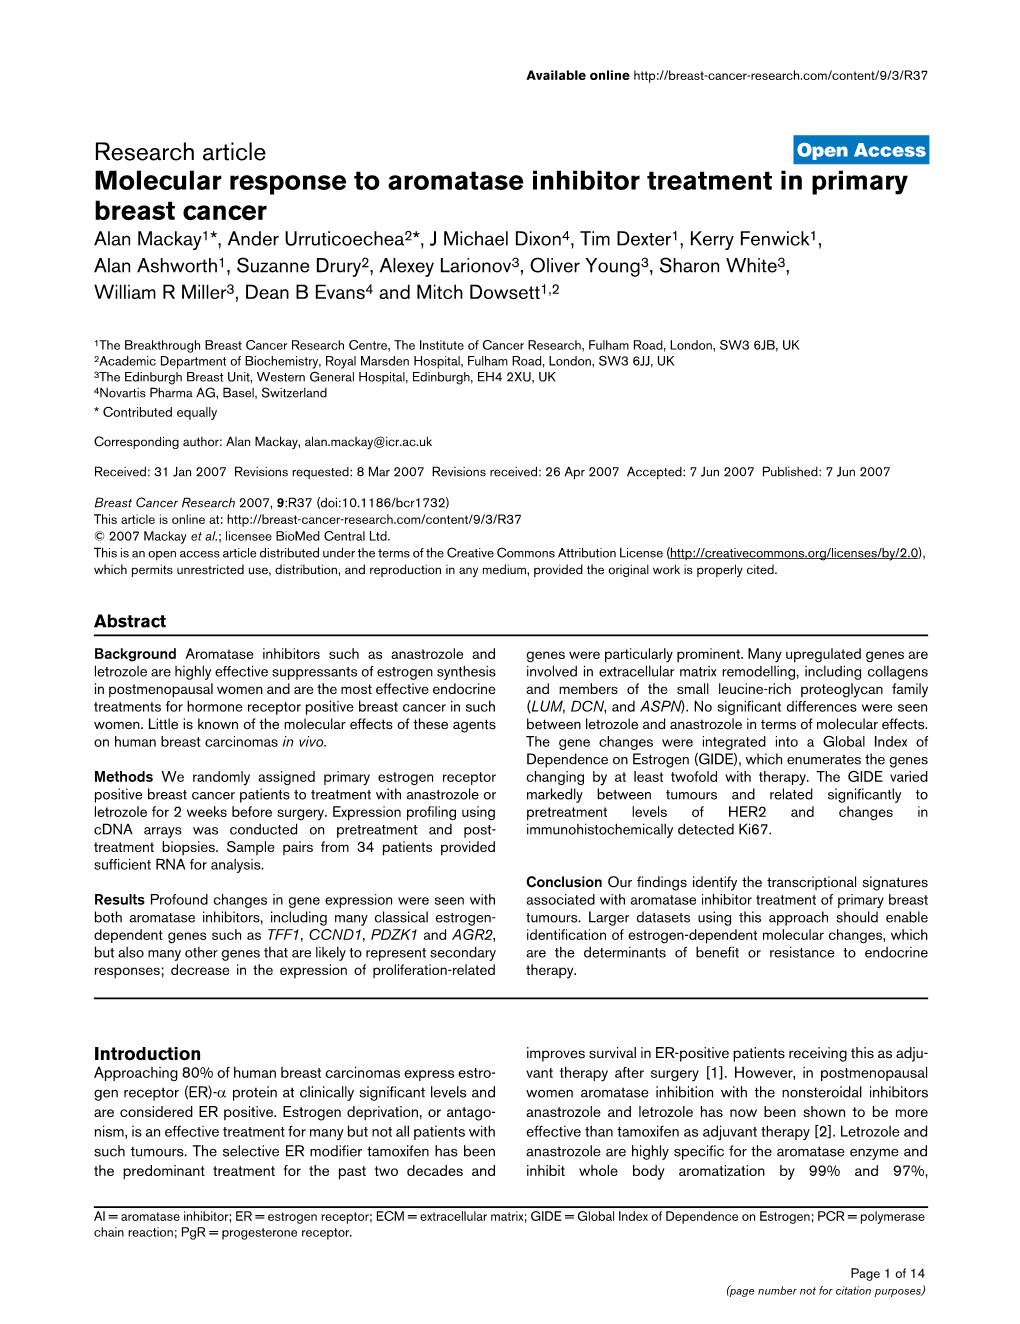 Molecular Response to Aromatase Inhibitor Treatment in Primary Breast